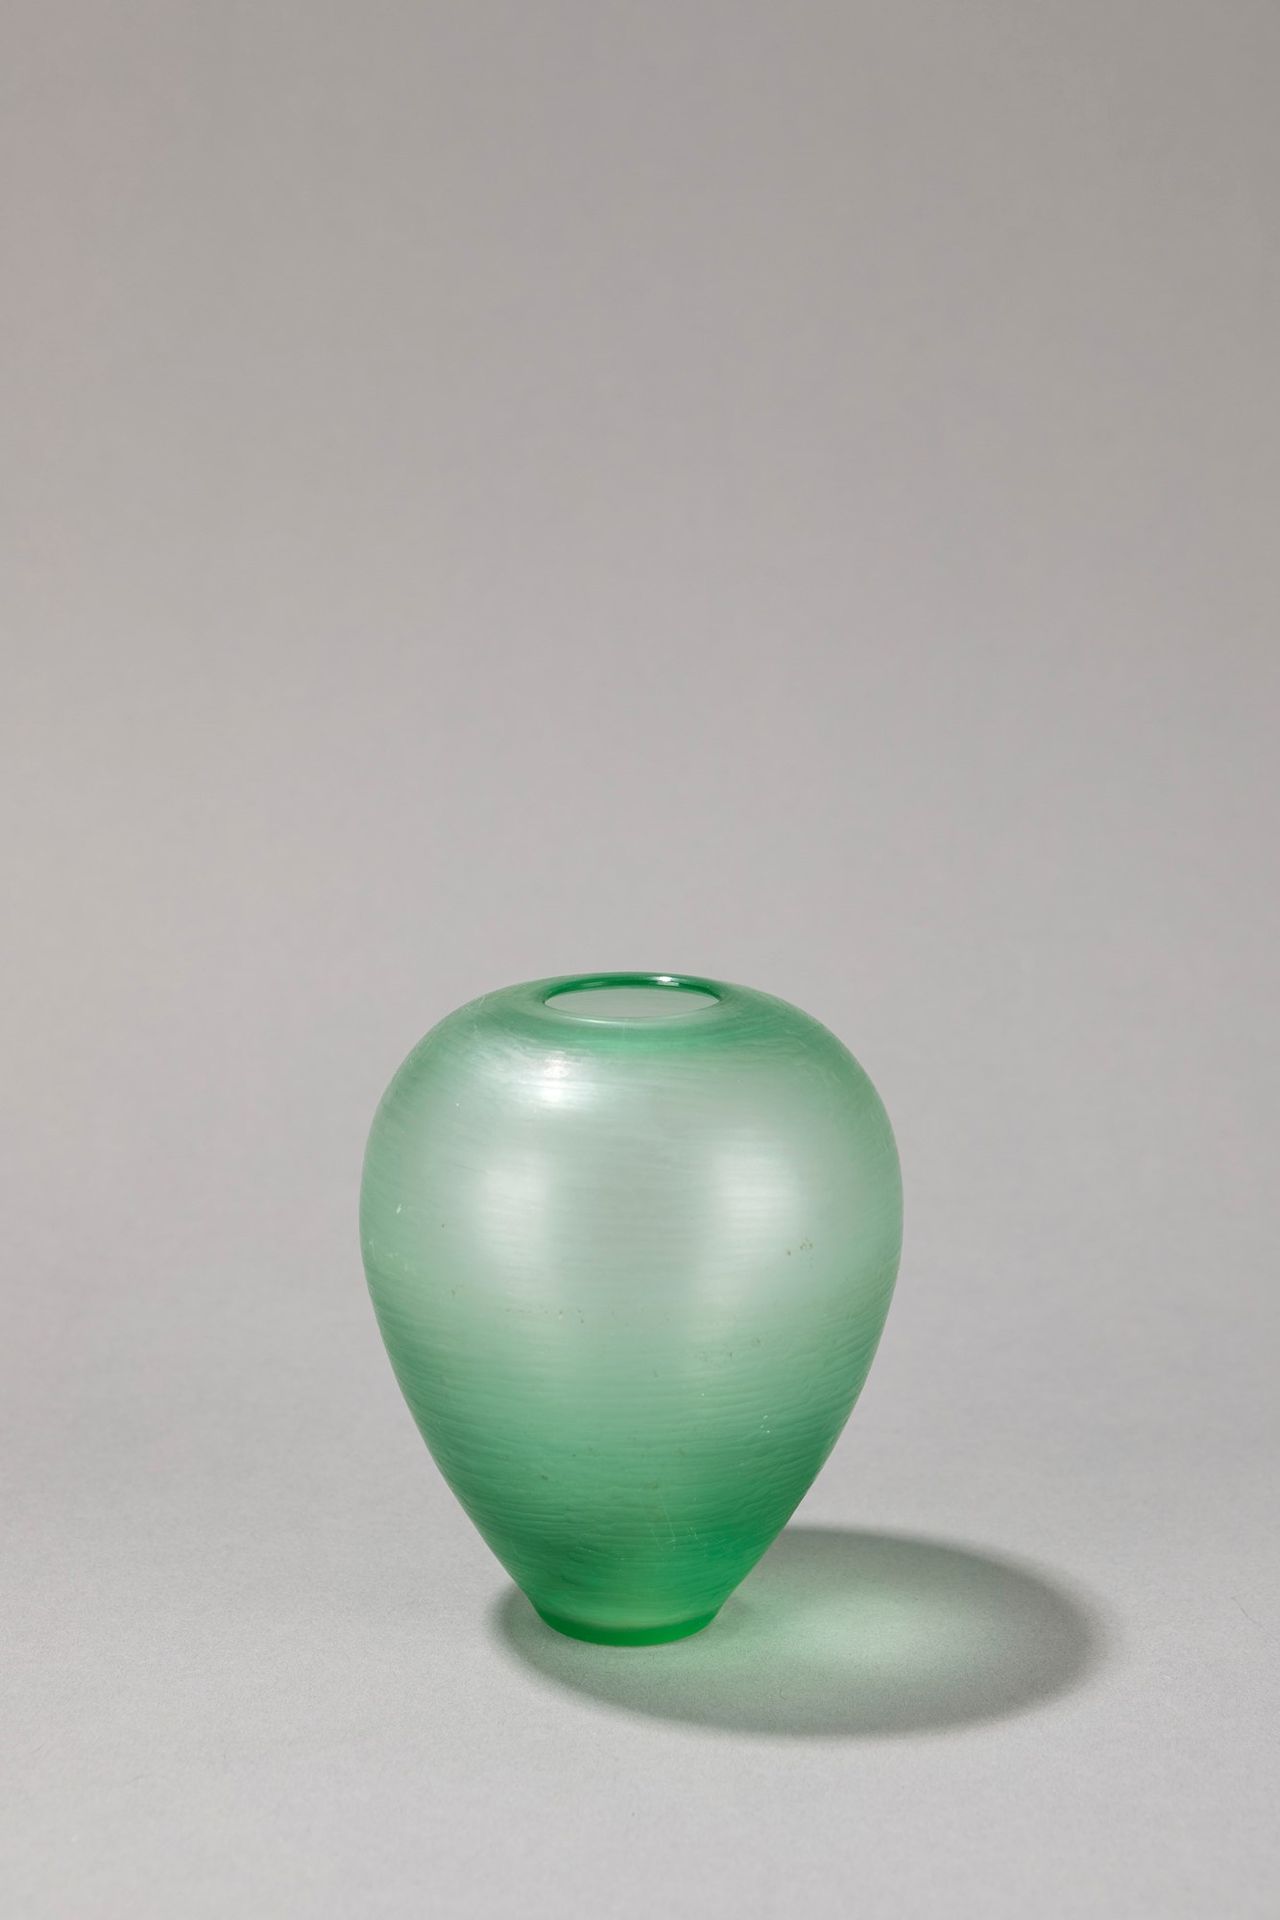 VENINI 花瓶，1960年约

cm 10 x 8
锻打吹制玻璃。

意大利维尼尼公司的雕刻标志